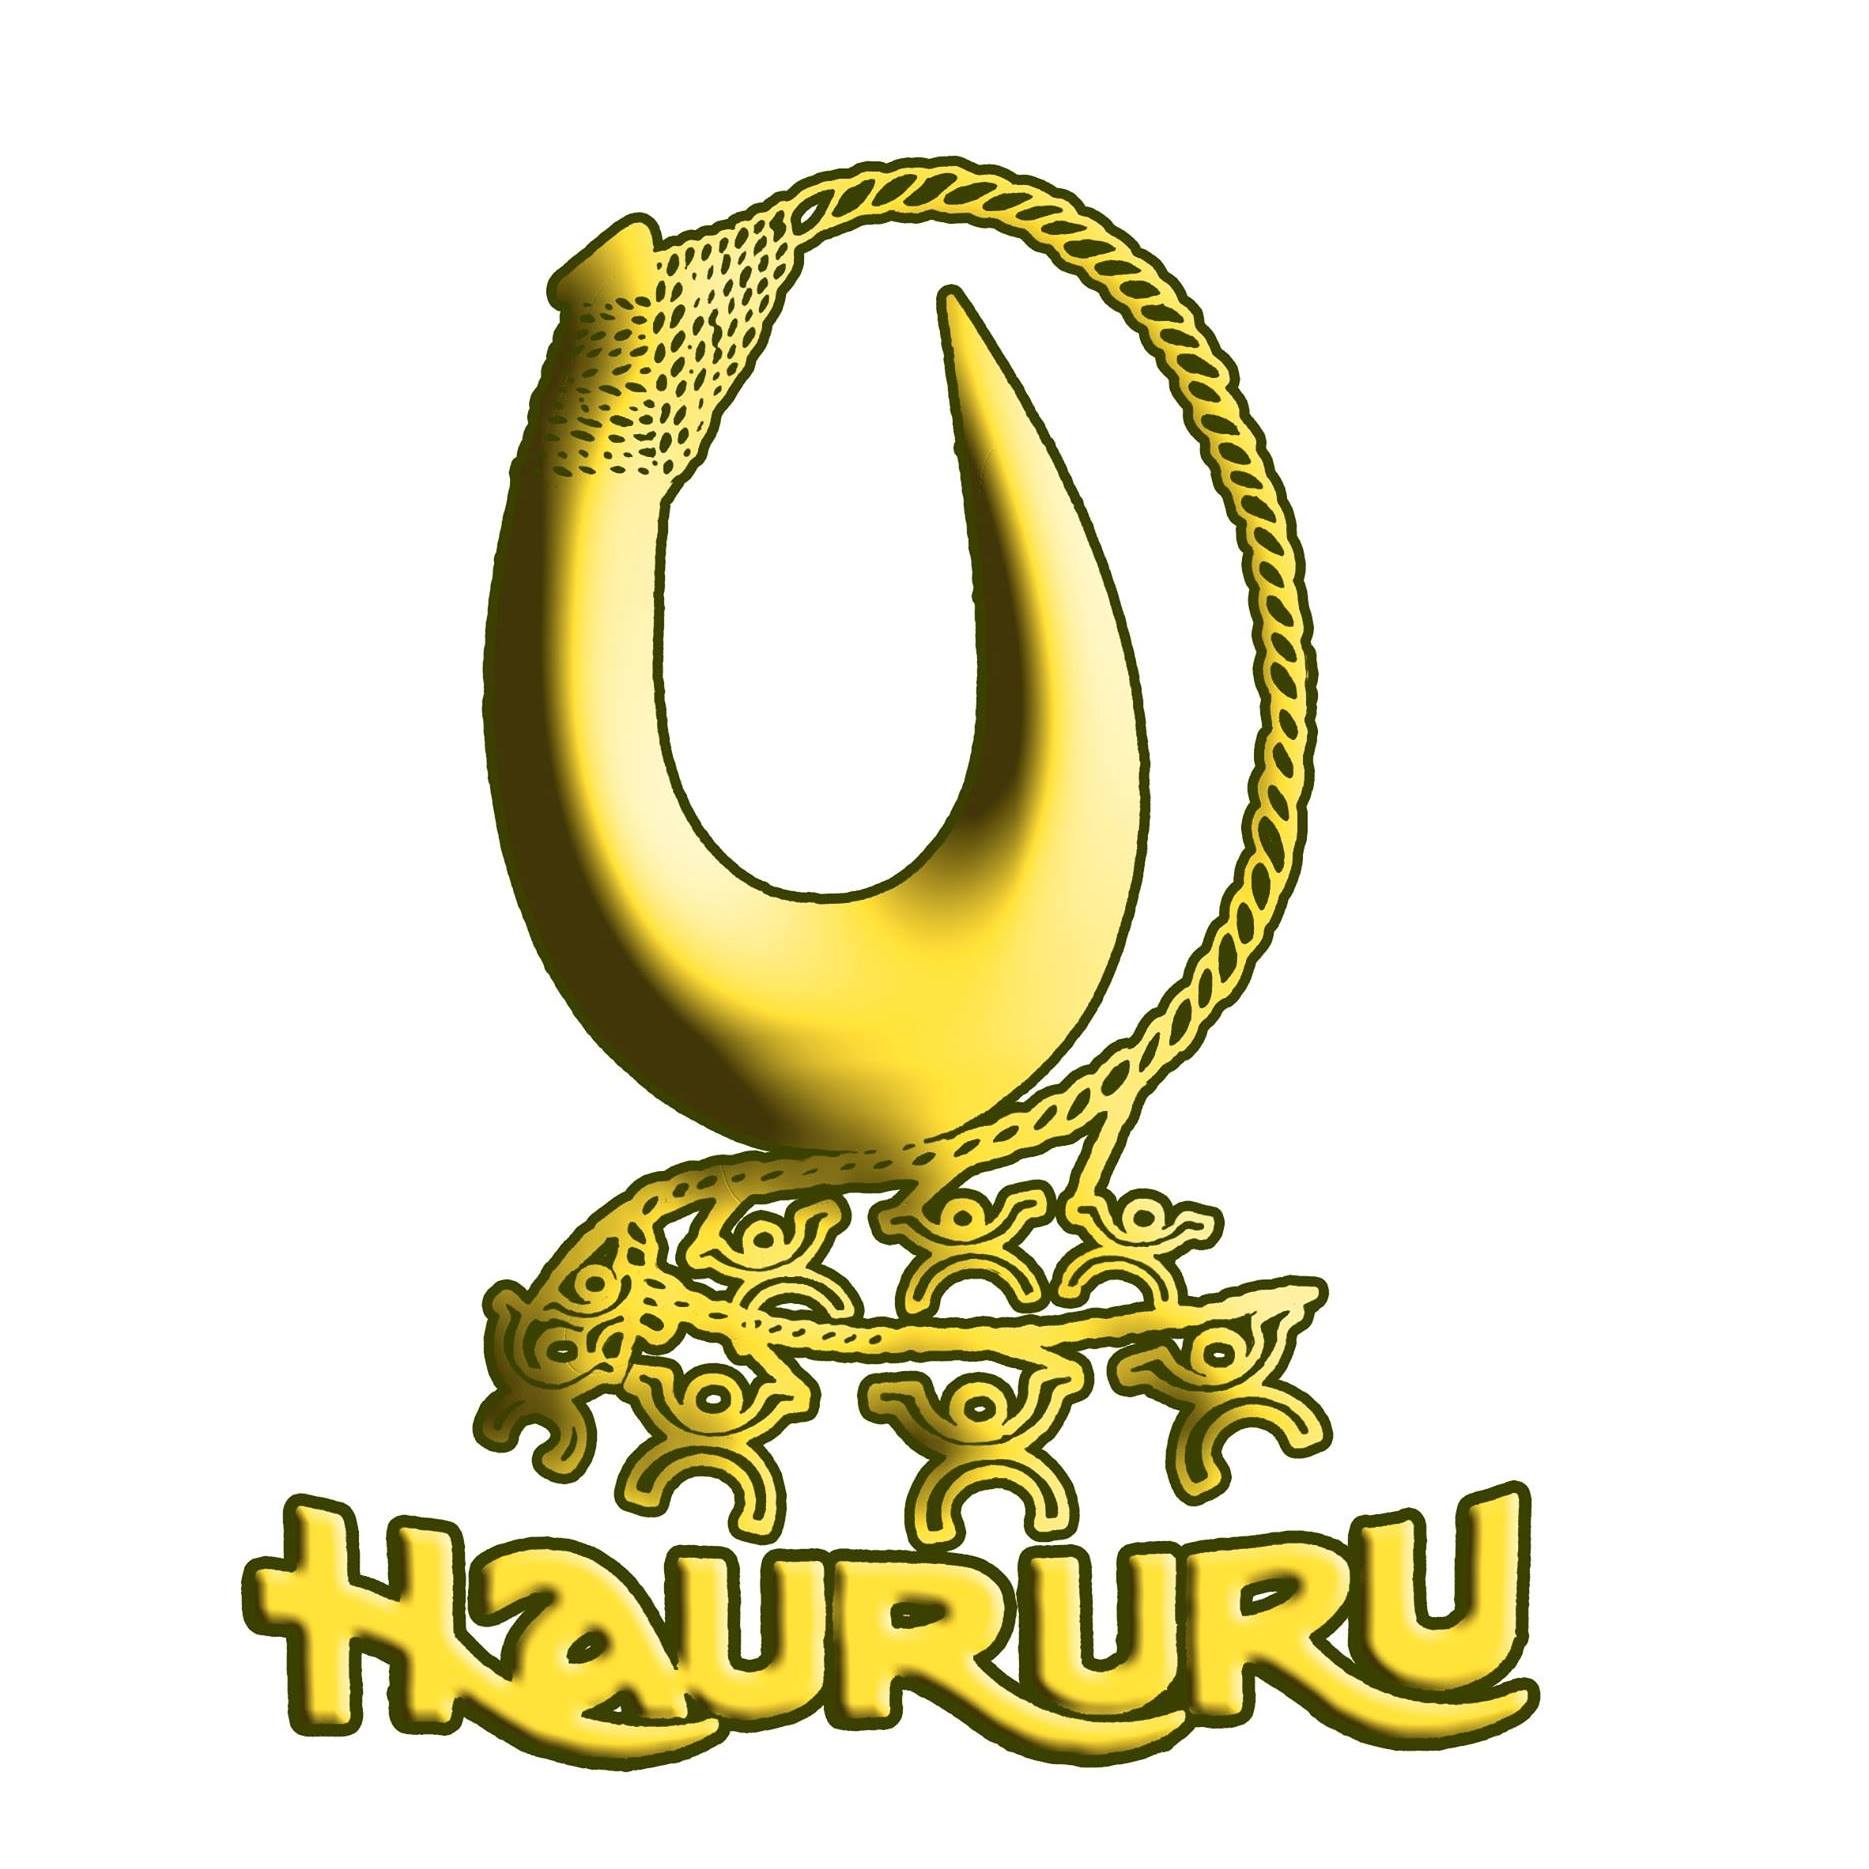 Association Haururu